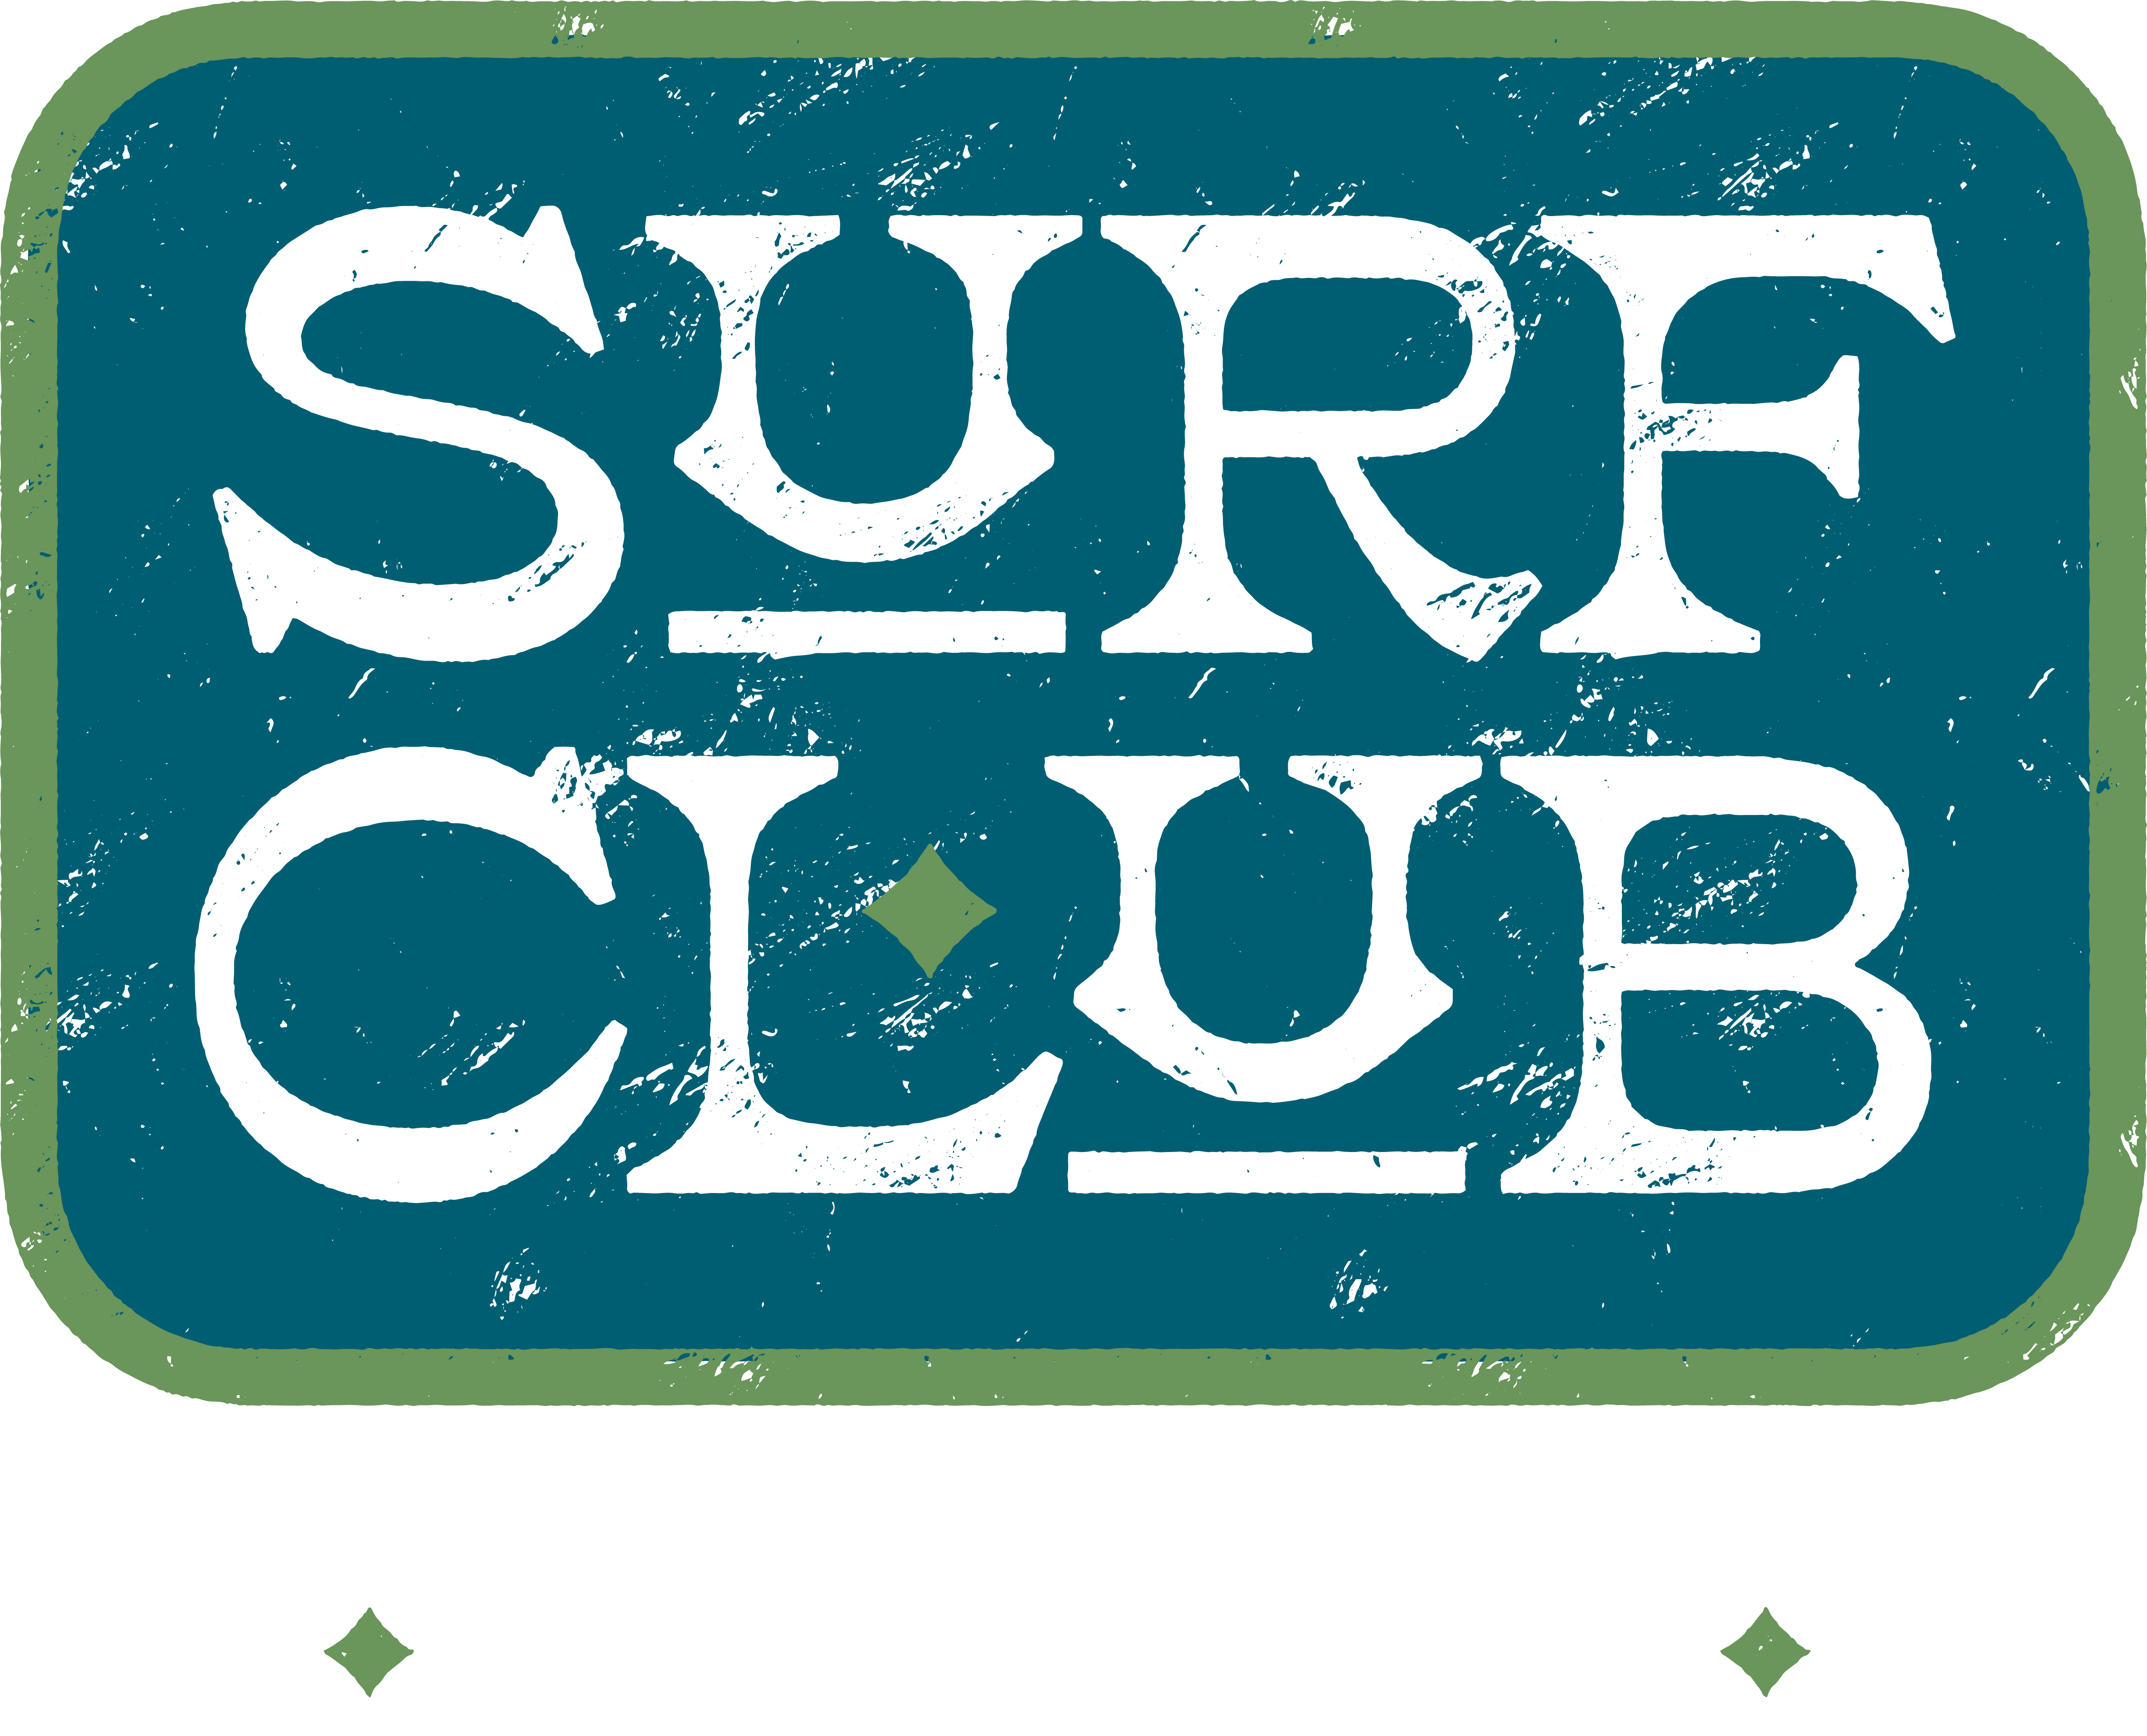 20HC Social - Surf Club Newport @ The Surf Club - Newport | Newport | Rhode Island | United States